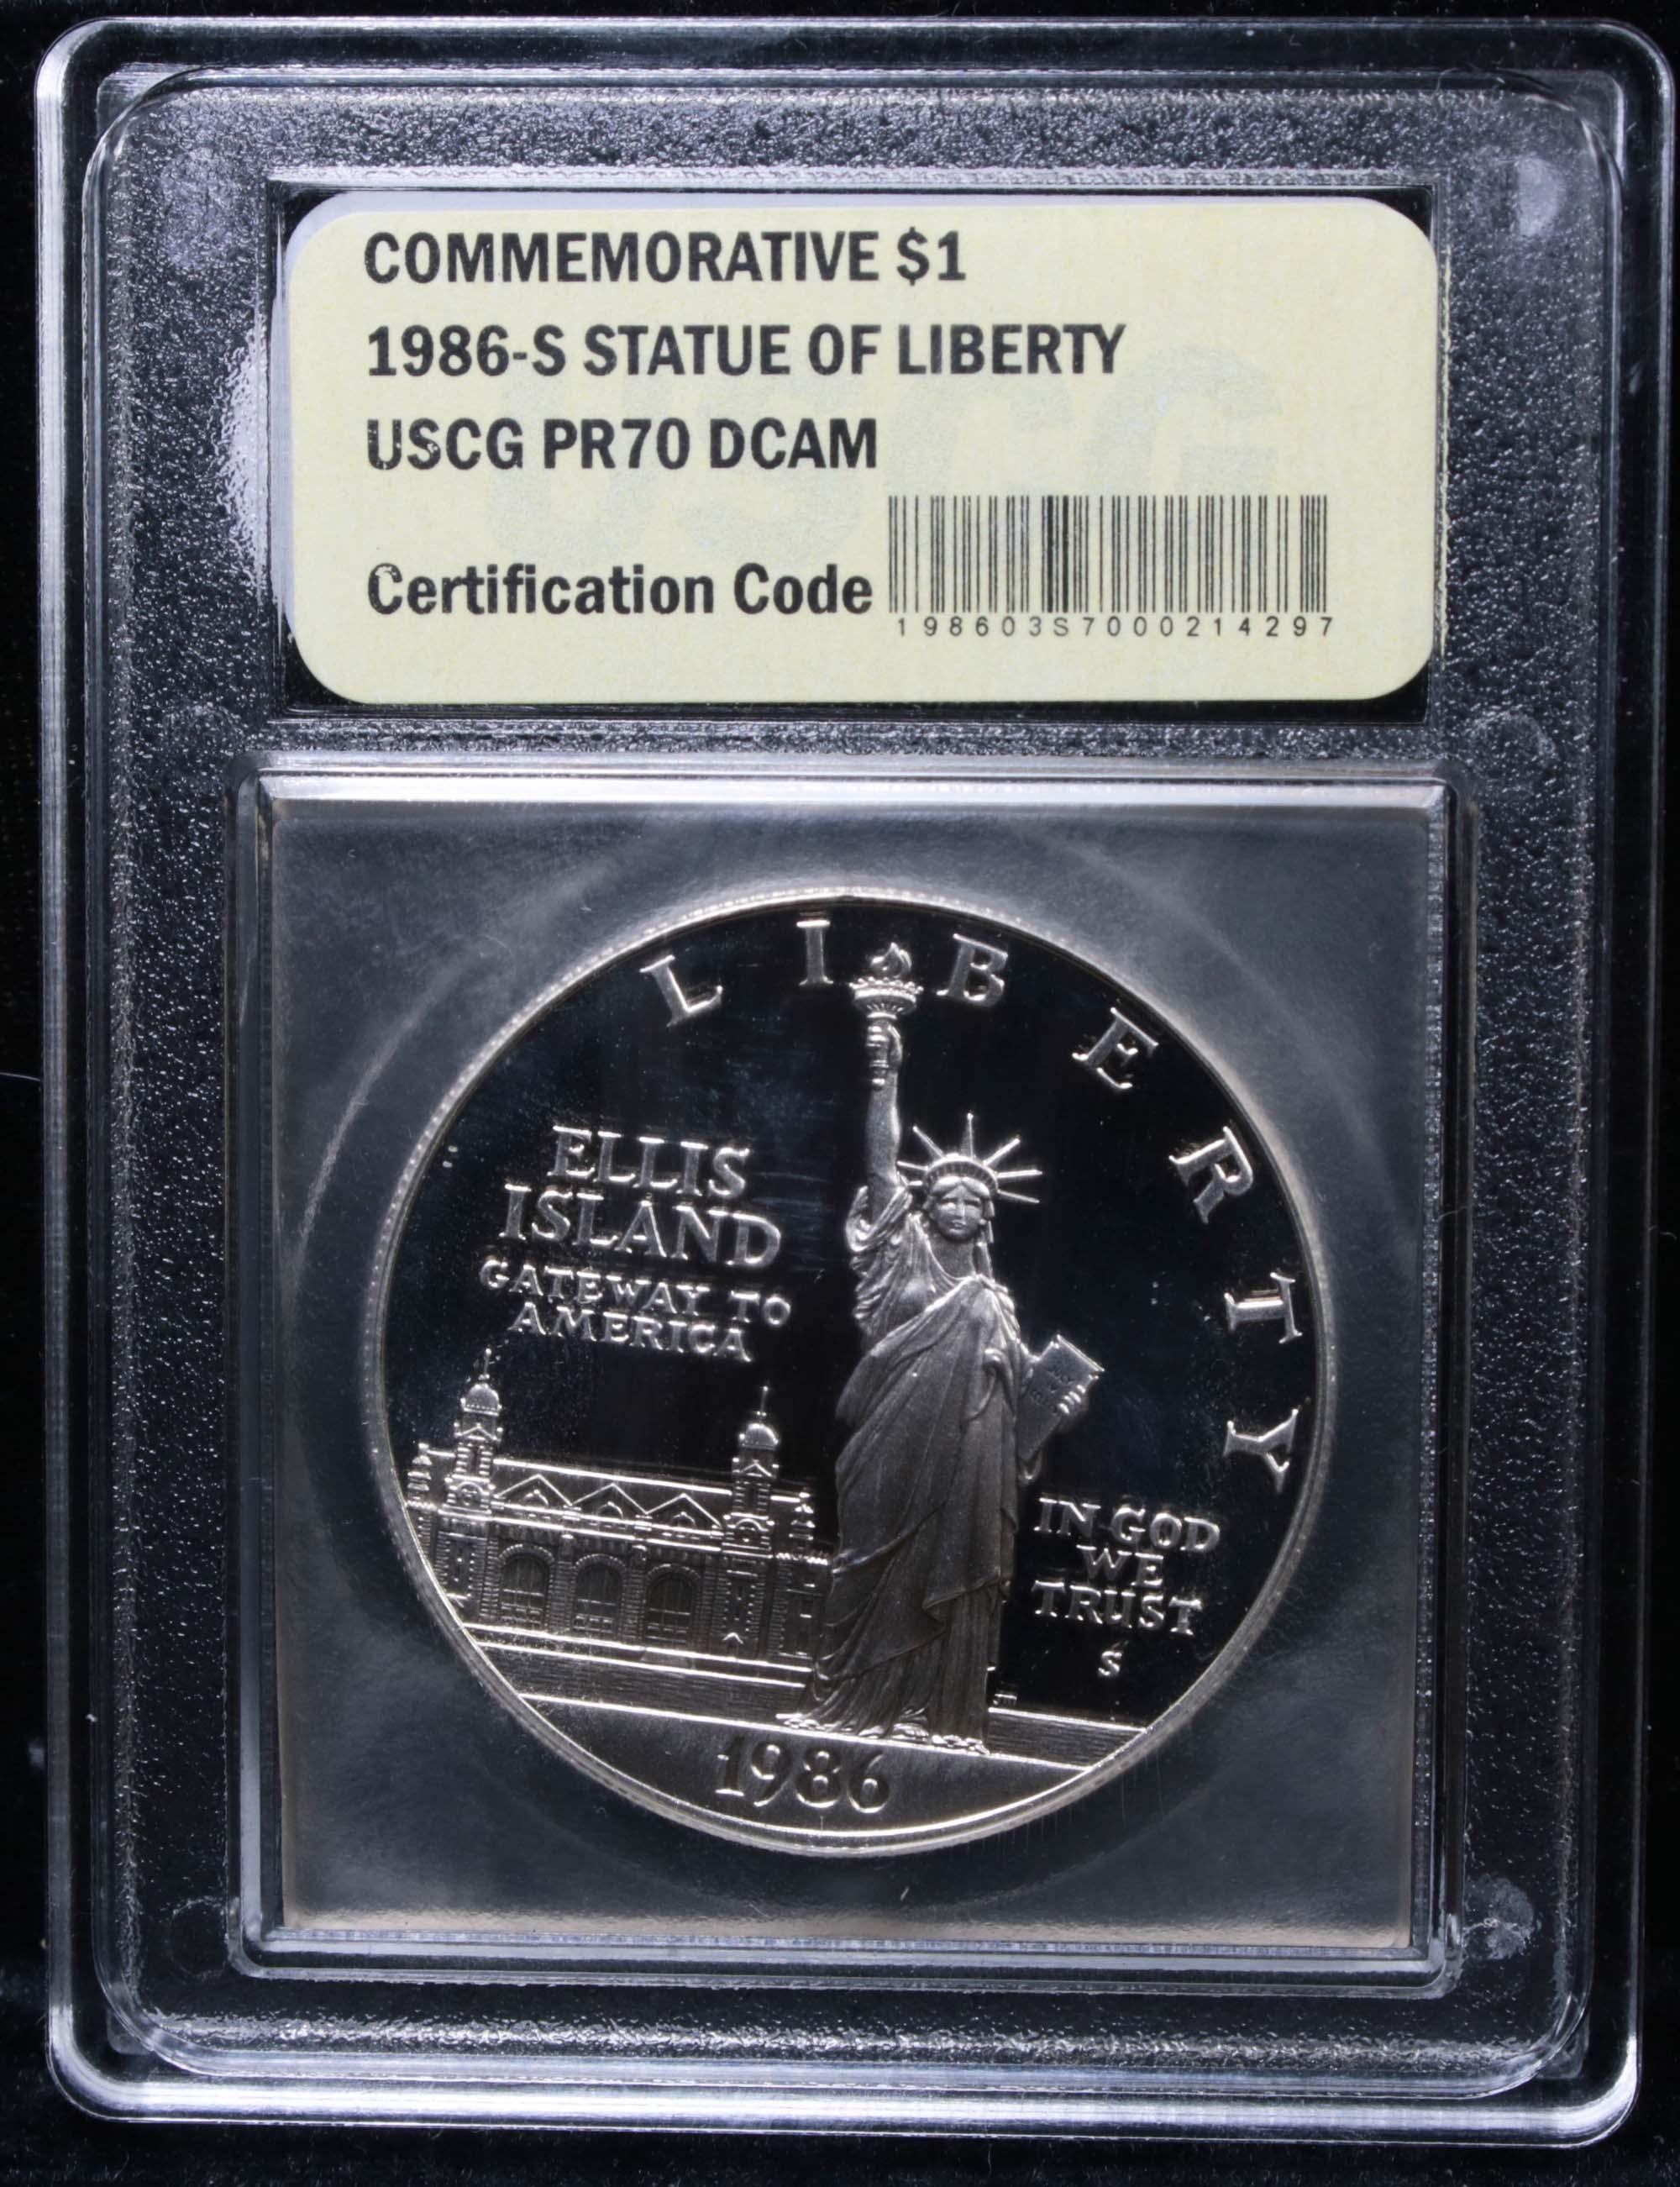 1986-s Statue of Liberty Modern Commem Dollar $1 Grades GEM++ Proof Deep Cameo